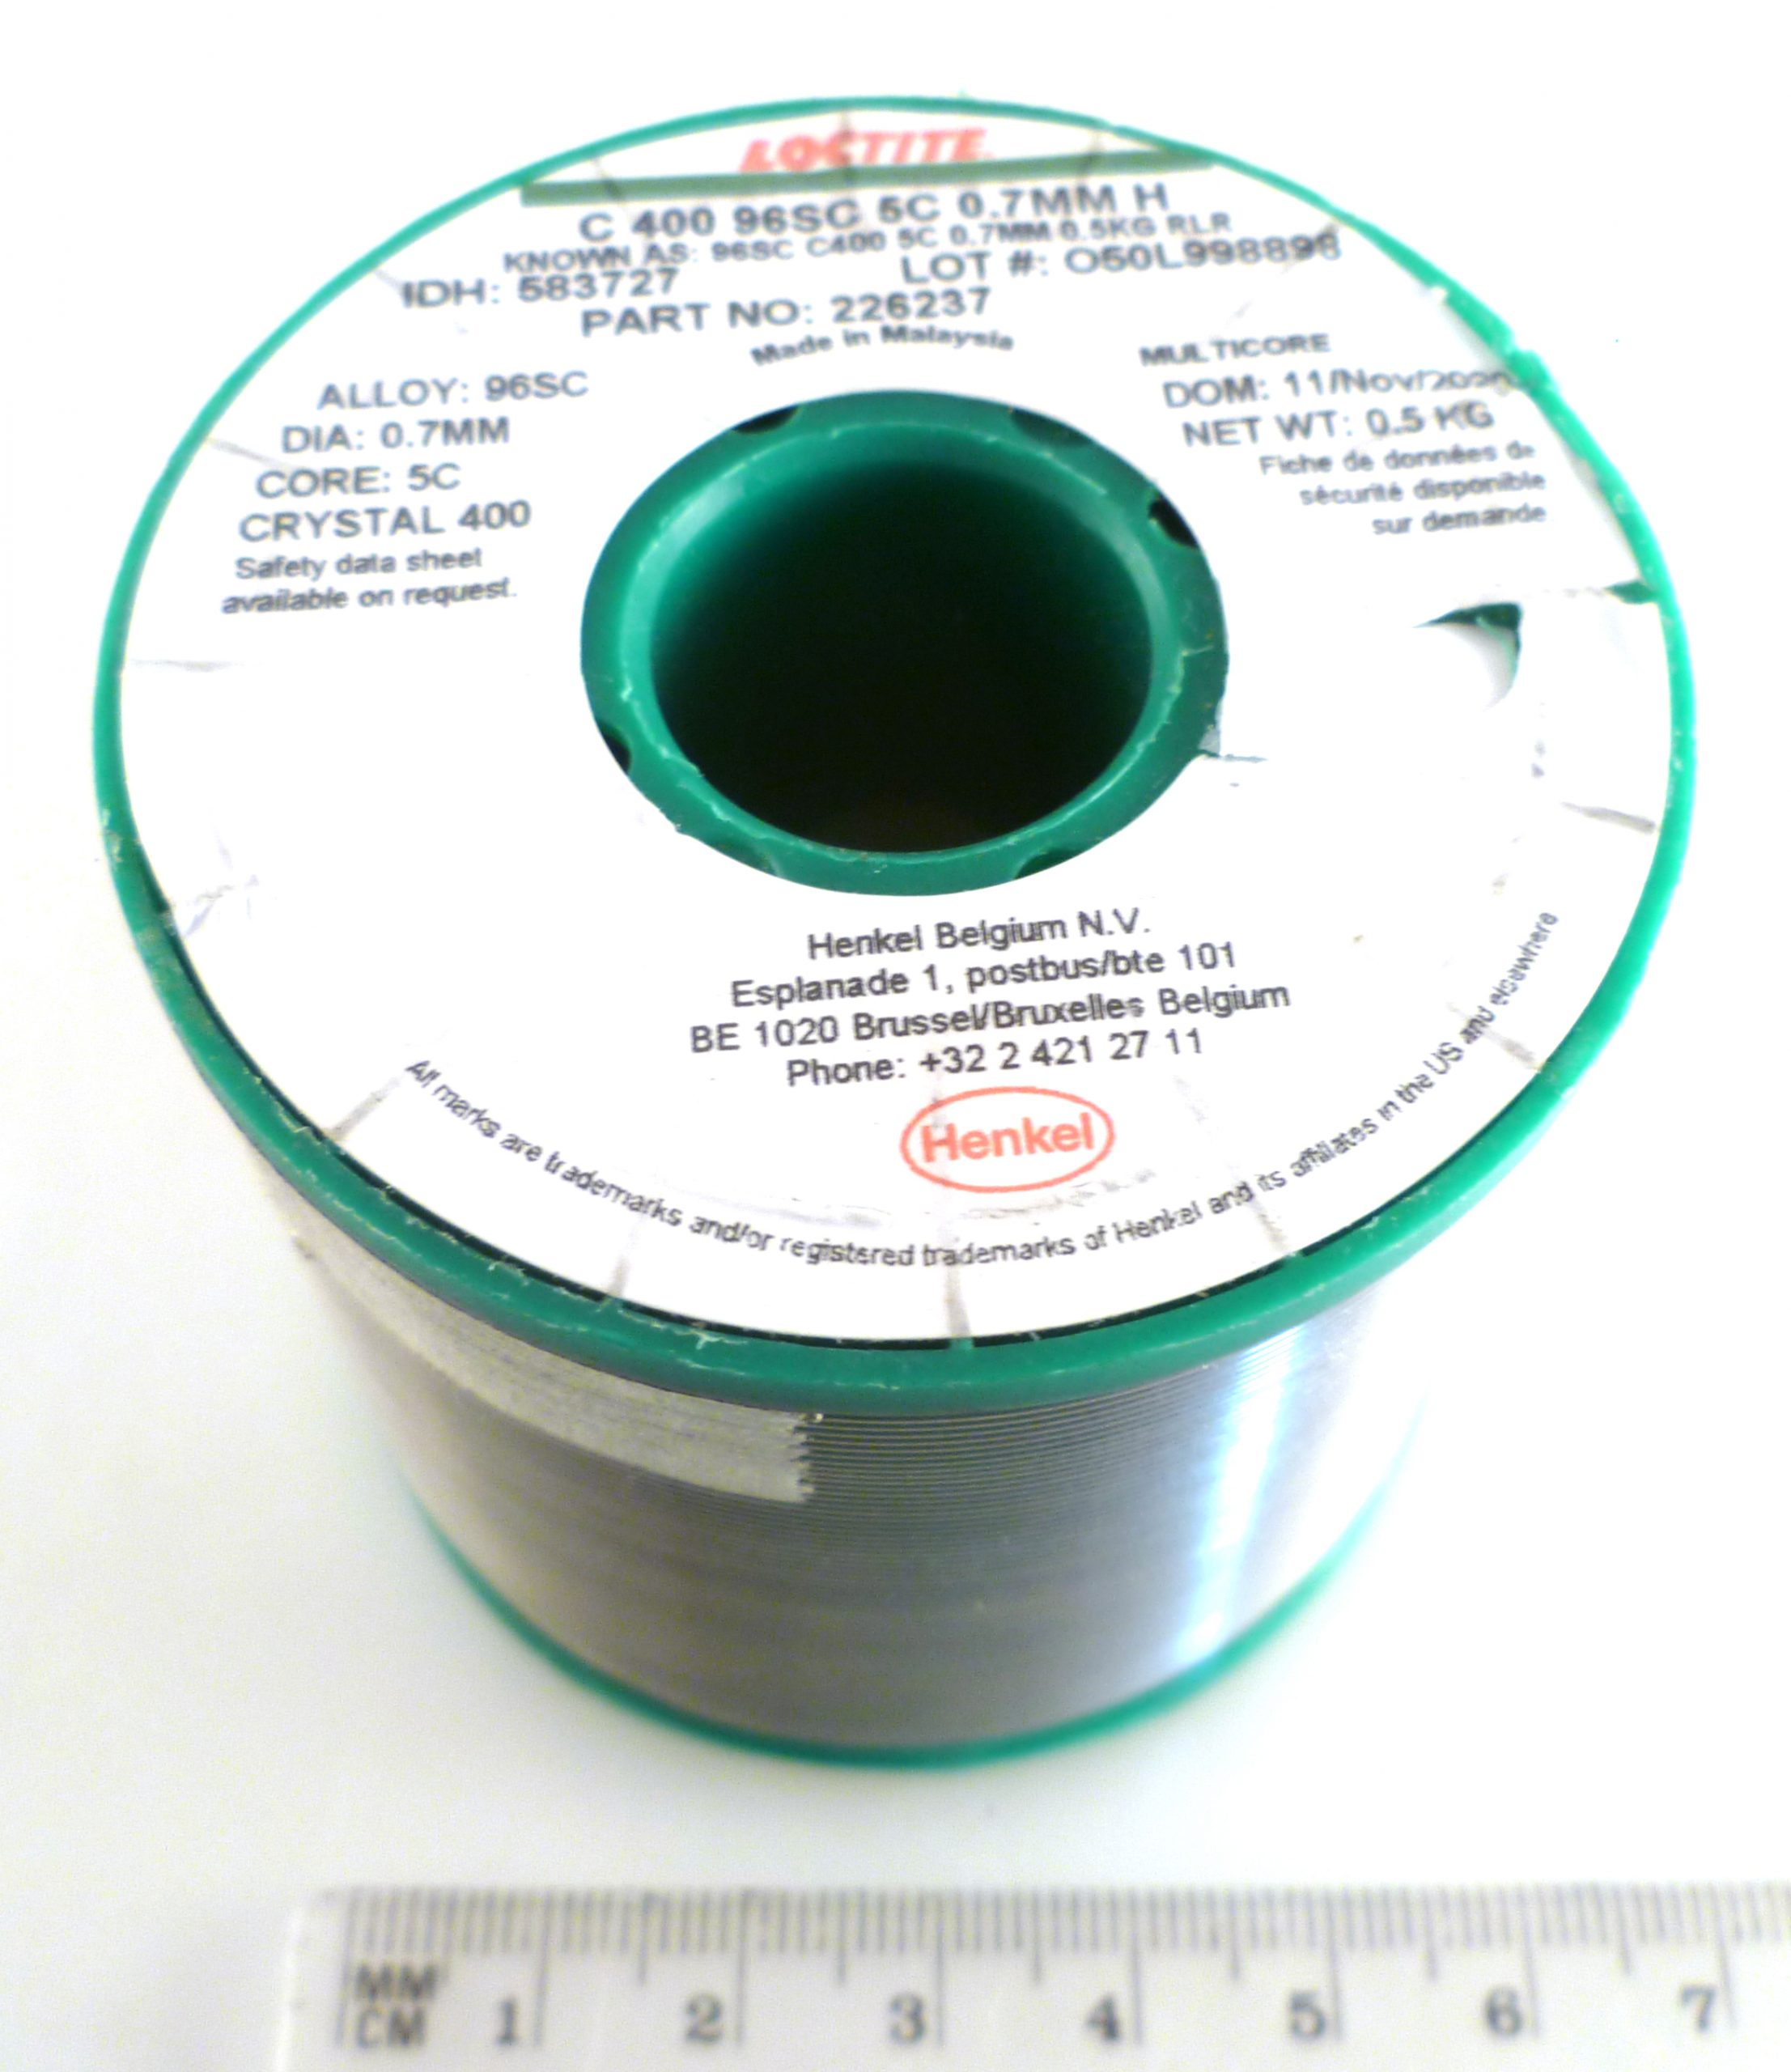 Loctite C400 96SC 5C 0.7mm H Lead Free Solder 500g Reel OM0272A